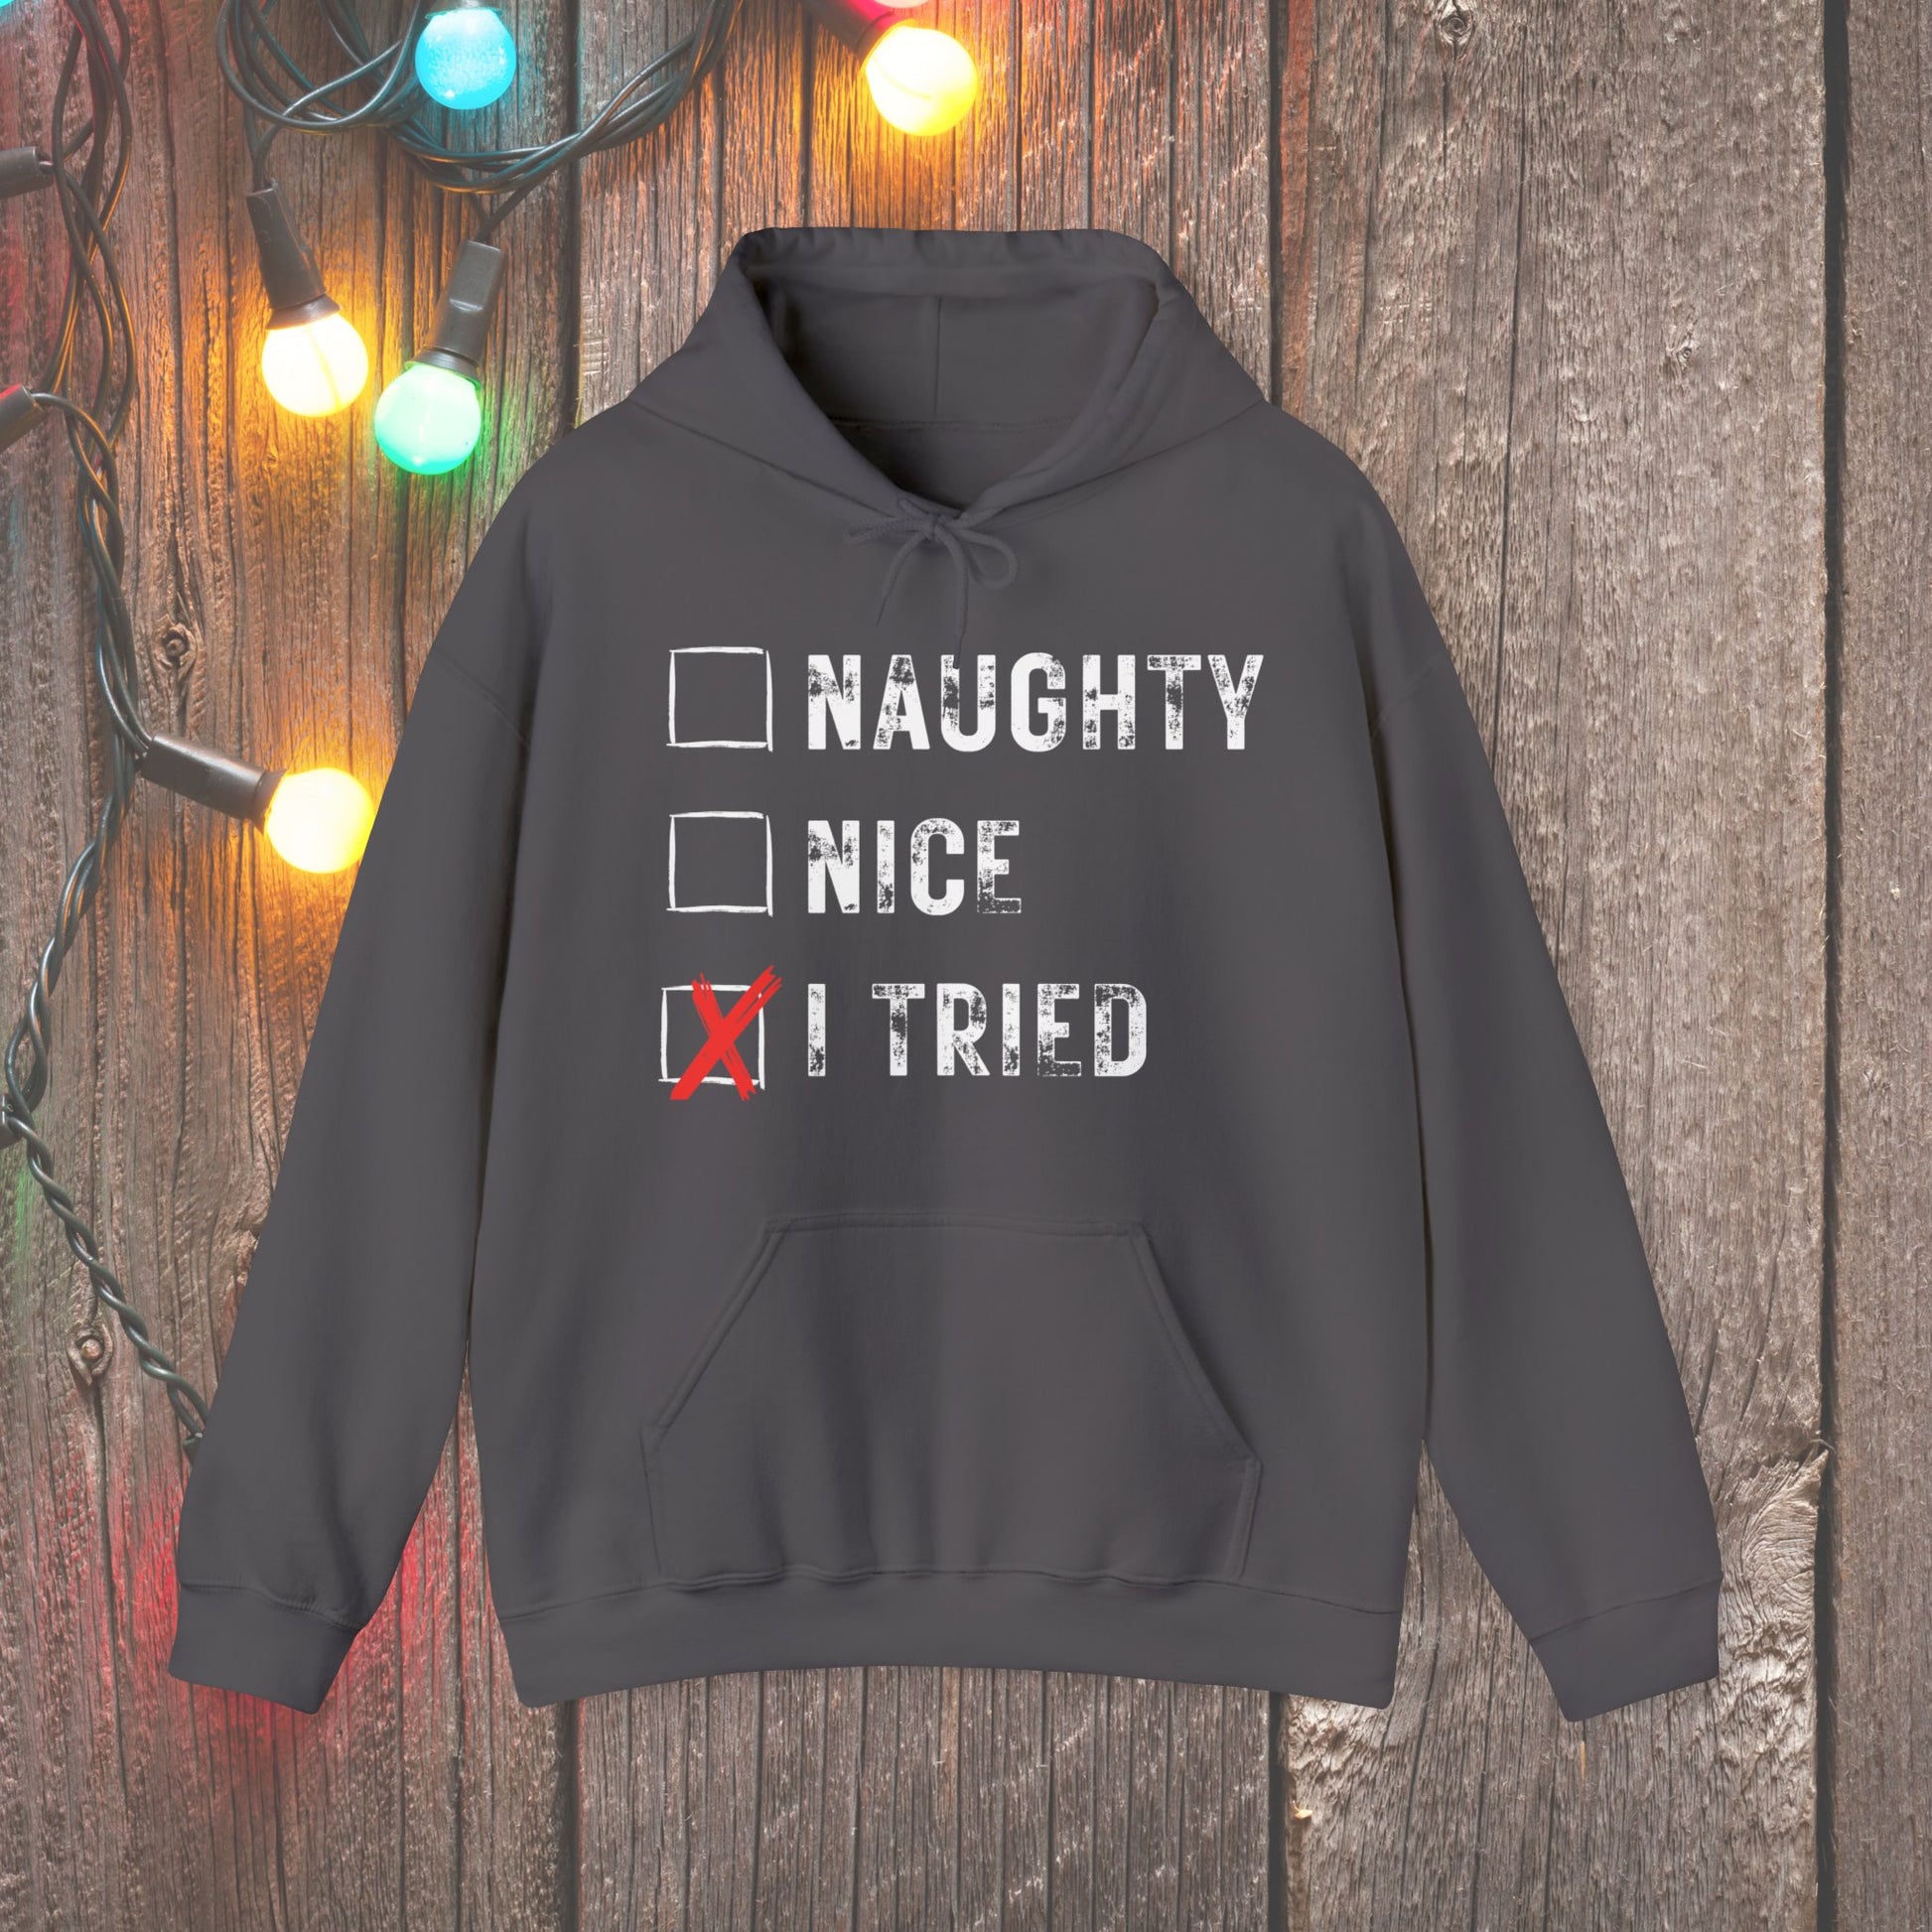 Christmas Hoodie - Naughty Nice I Tried - Mens Christmas Shirts - Youth and Adult Christmas Hooded Sweatshirt Hooded Sweatshirt Graphic Avenue Charcoal Adult Small 